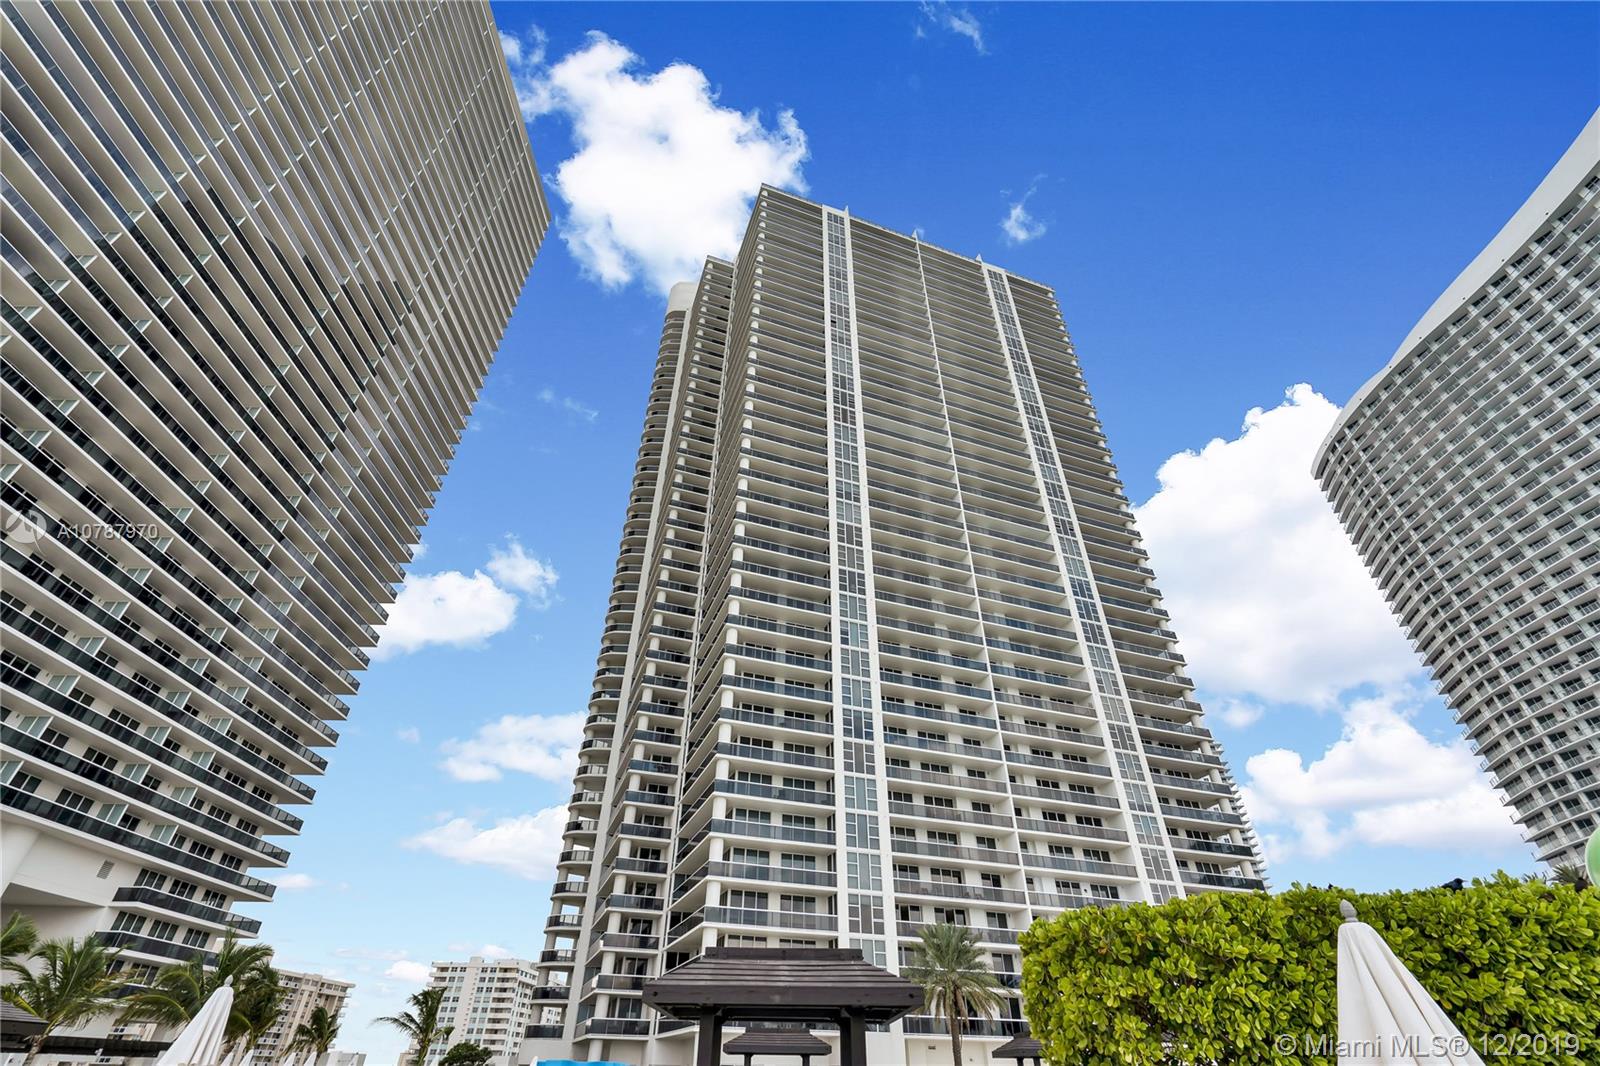 Beach Club Tower Three | Residences in Miami